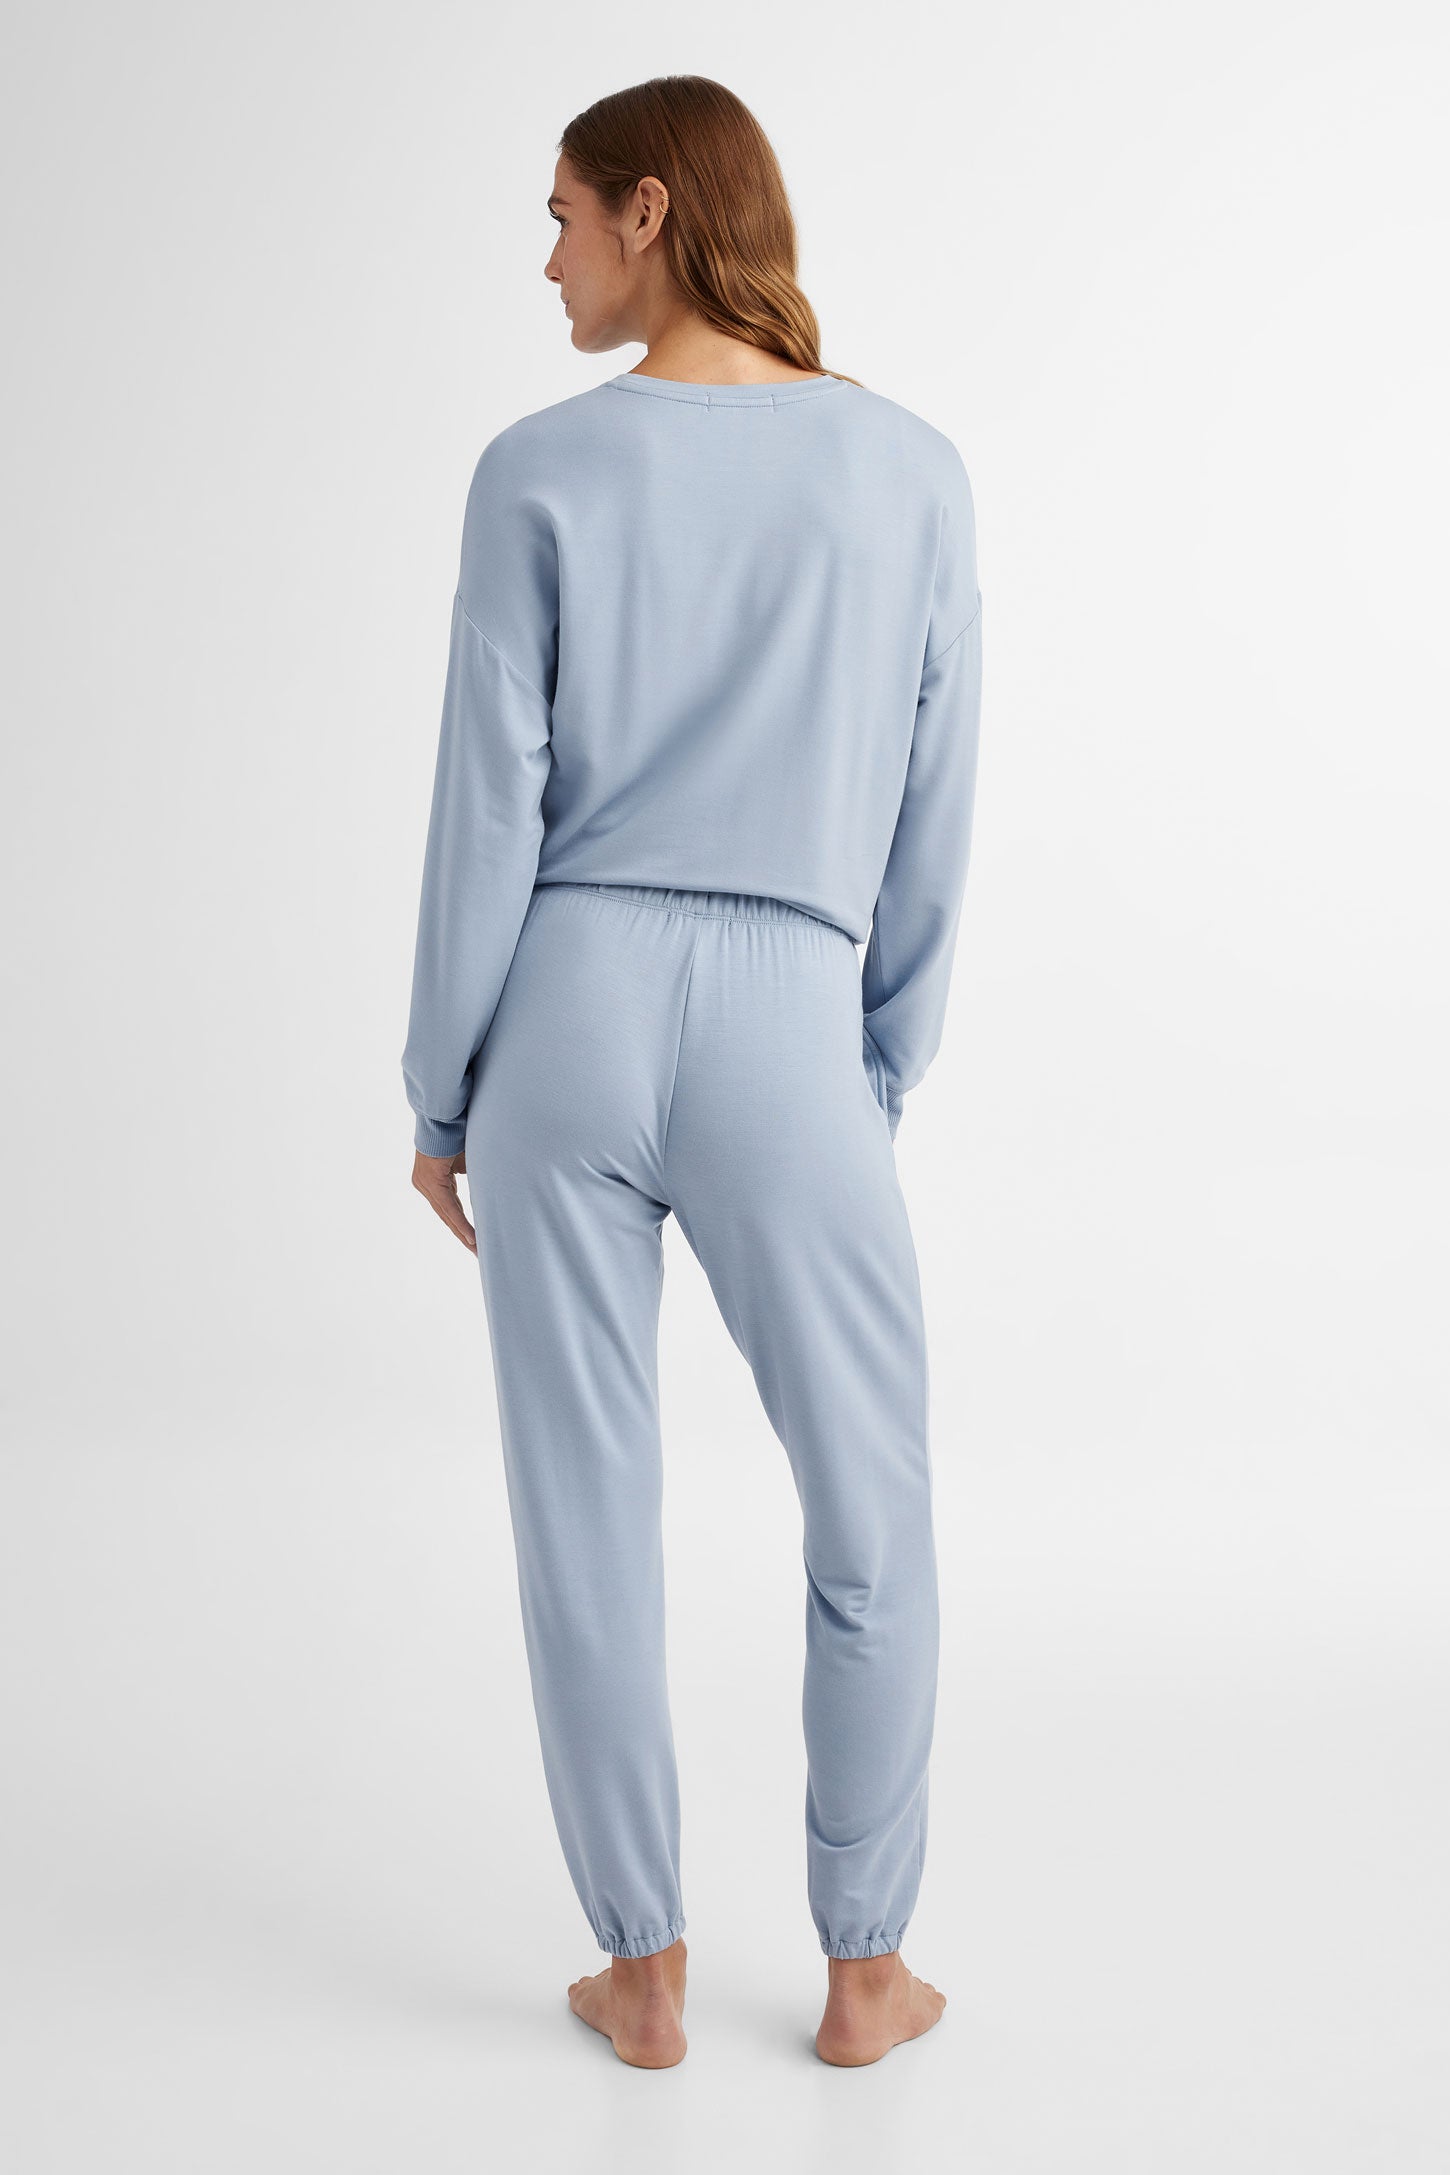 Pantalon jogger pyjama - Femme && BLEU